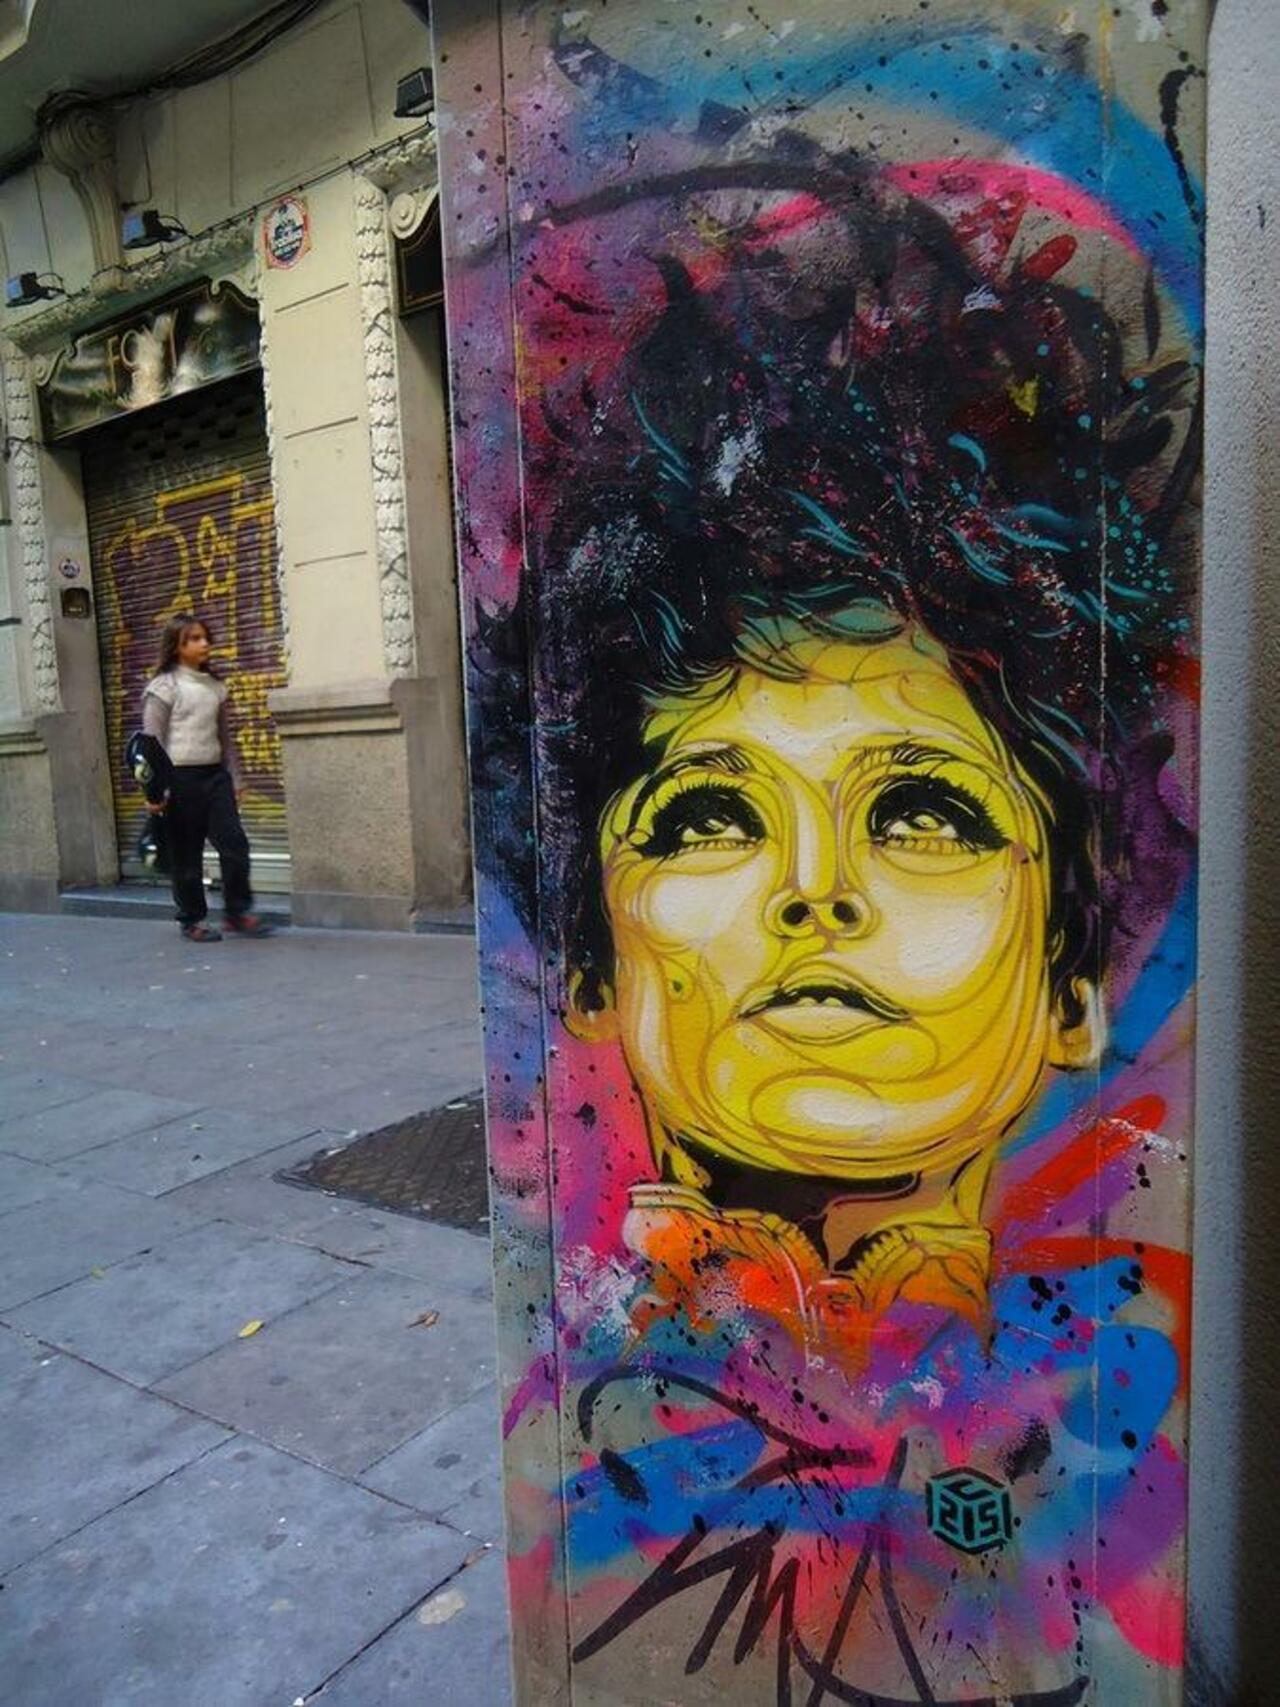 "@gianni_nigia: “@Pitchuskita: C215
Barcelona, Spain

#streetart #art #graffiti #urbanart http://t.co/3CX0aR28Ai”"